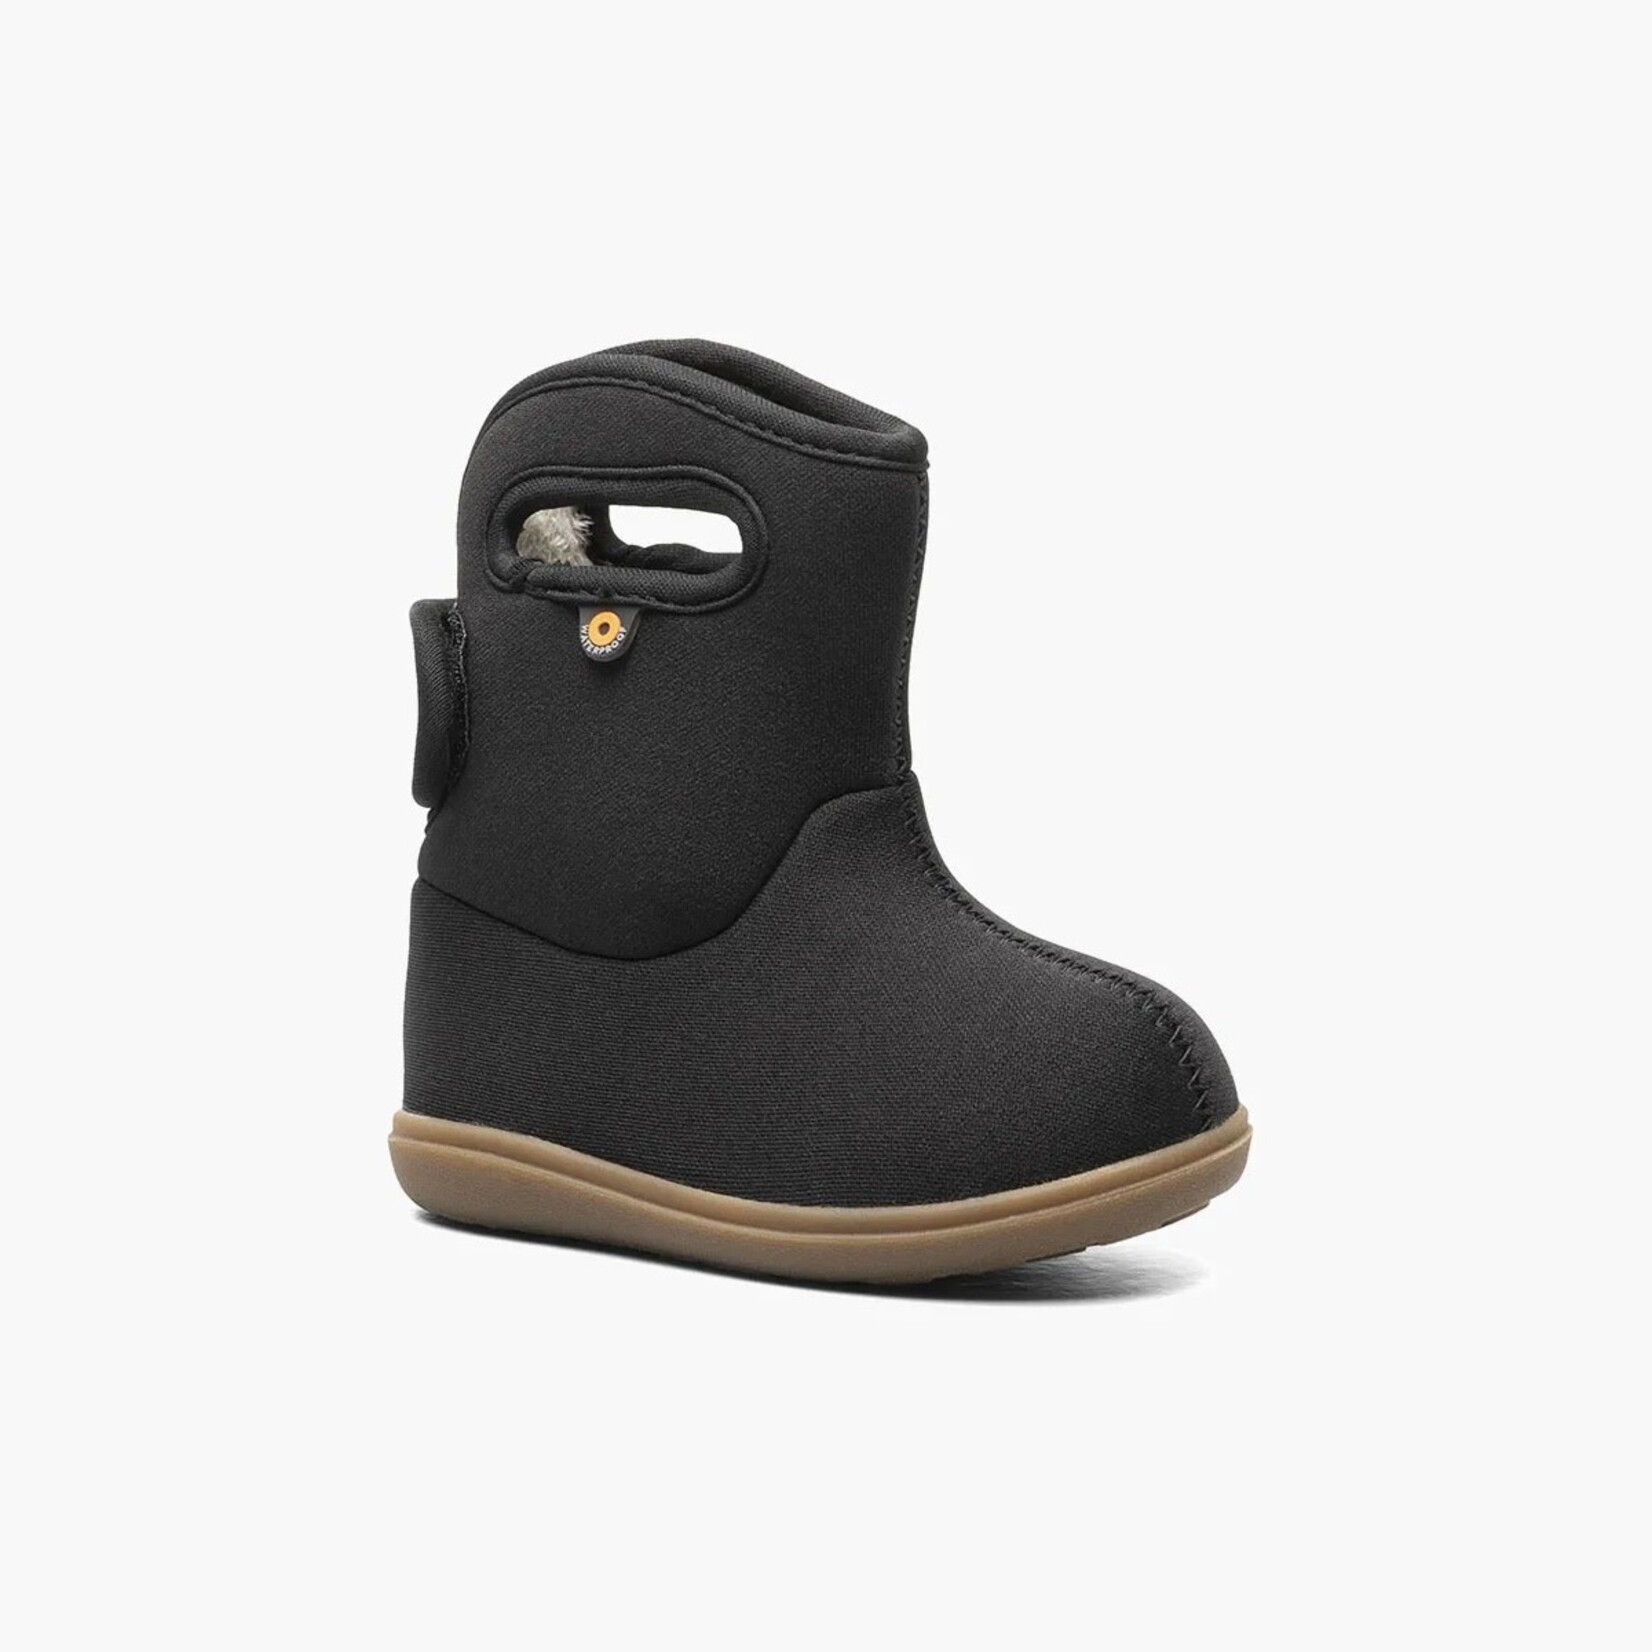 BOGS BOGS - Insulated Mid Season Waterproof Boots 'Baby Bogs II Solid' - Black